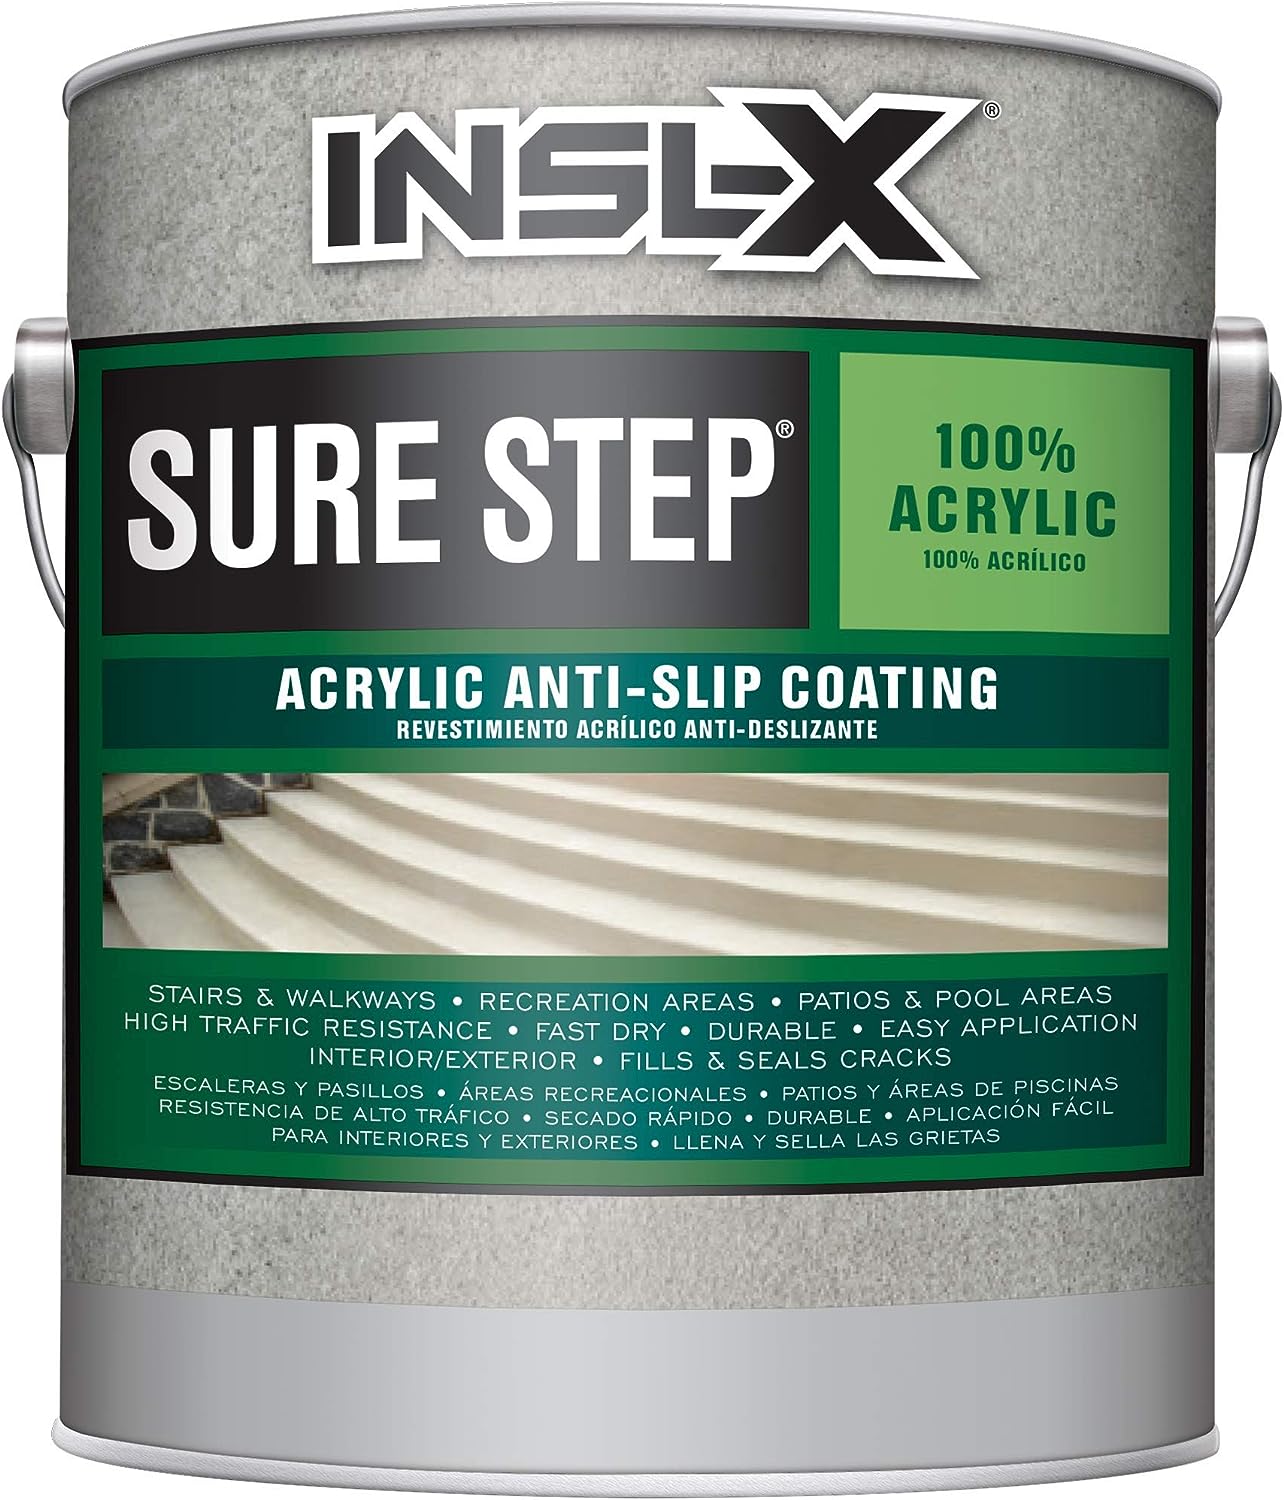 INSL-X SU031009A-01 Sure Step Acrylic Anti-Slip [...]